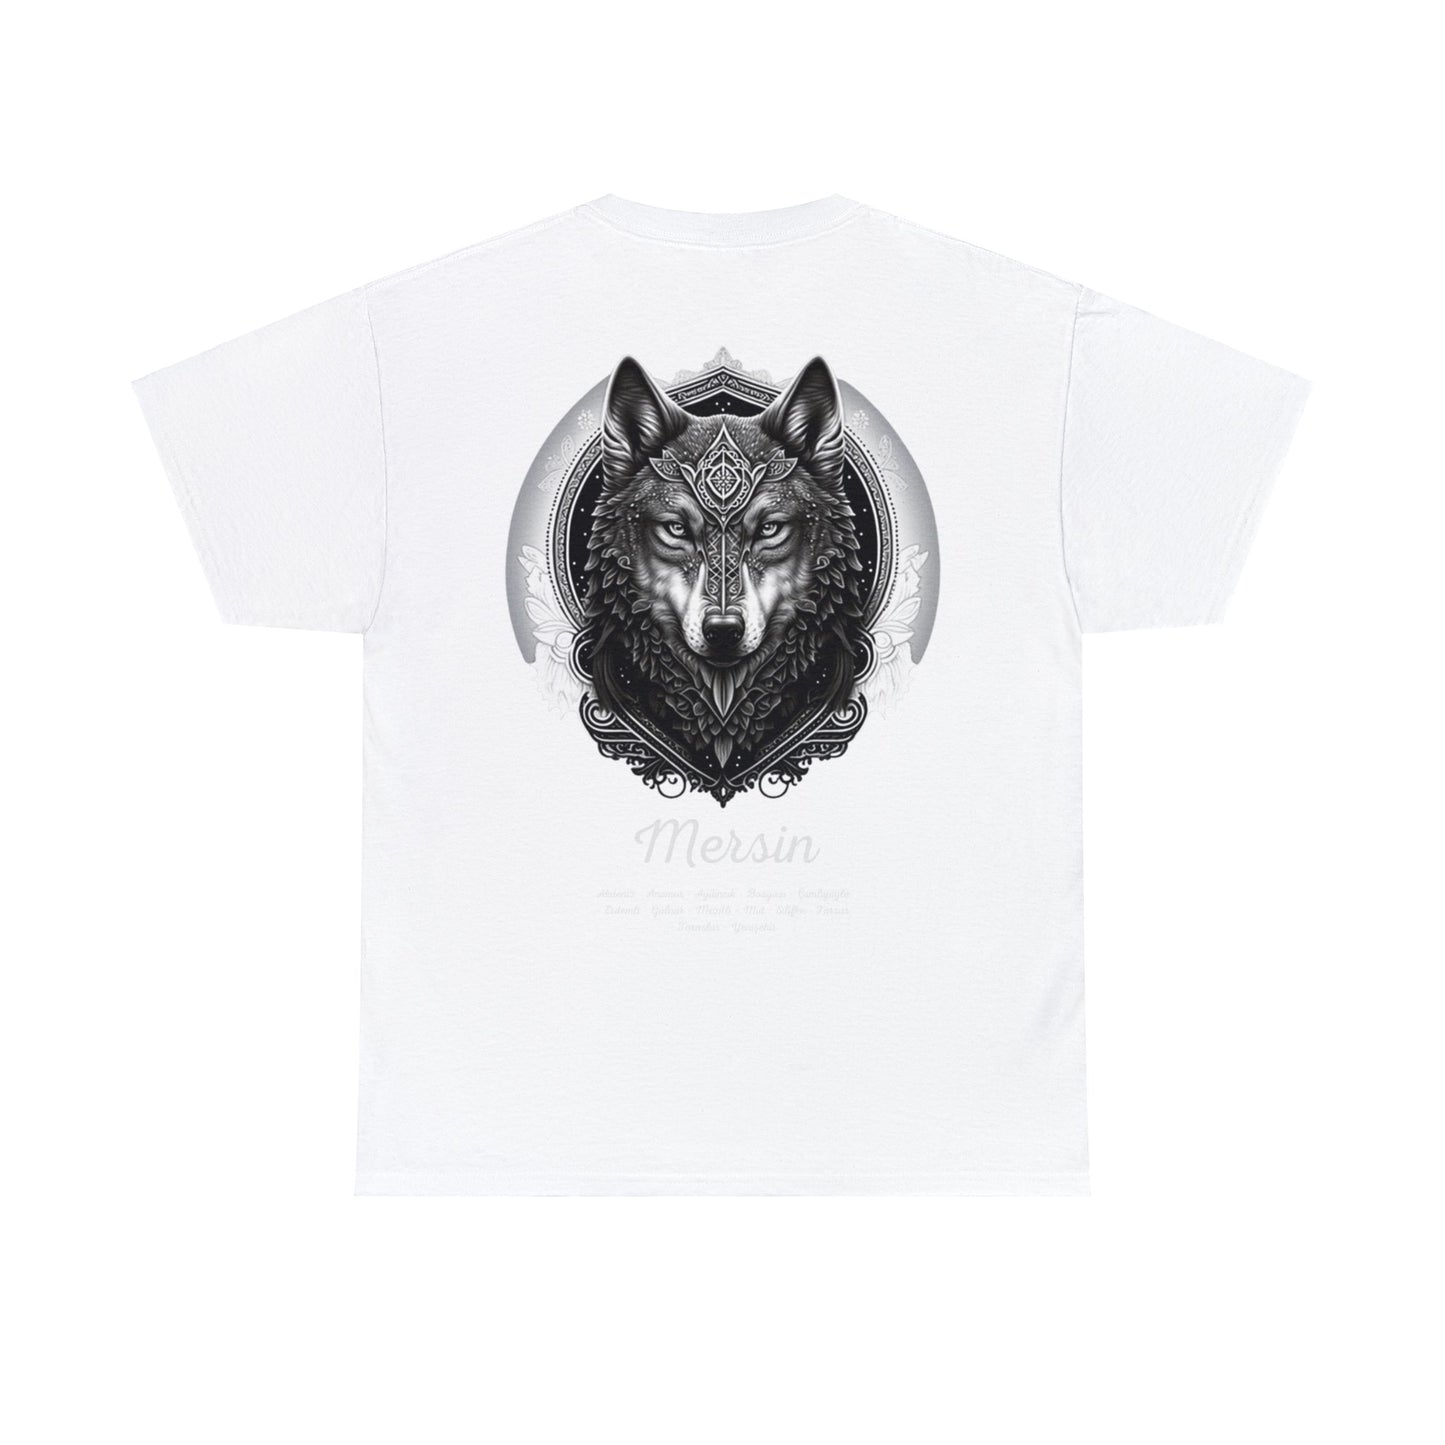 Kurt - 33 Mersin - T-Shirt - Back Print - Black/White